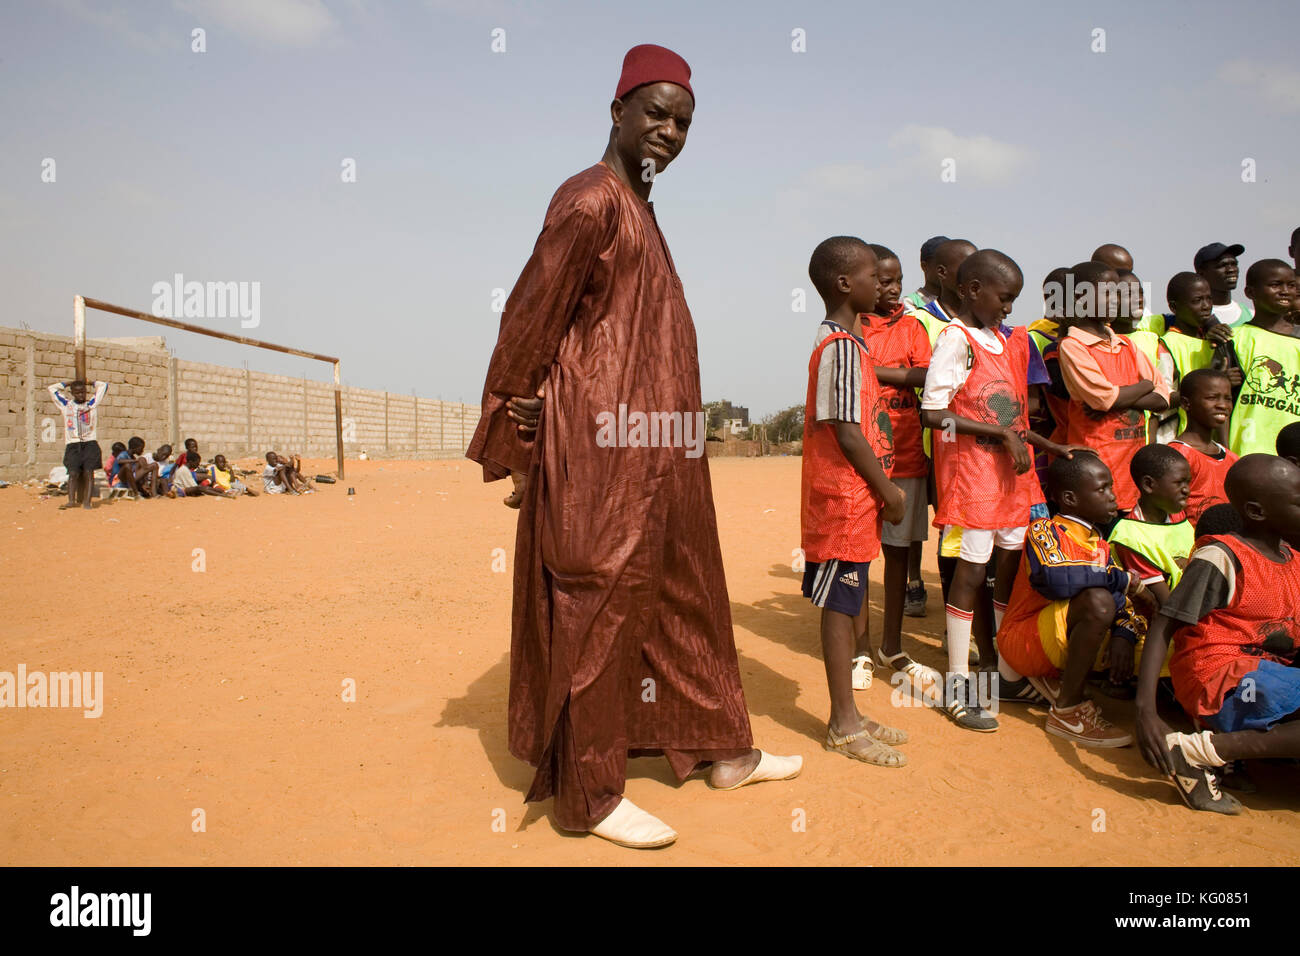 A football coaching session in progress in the Senegal capital Dakar. Stock Photo